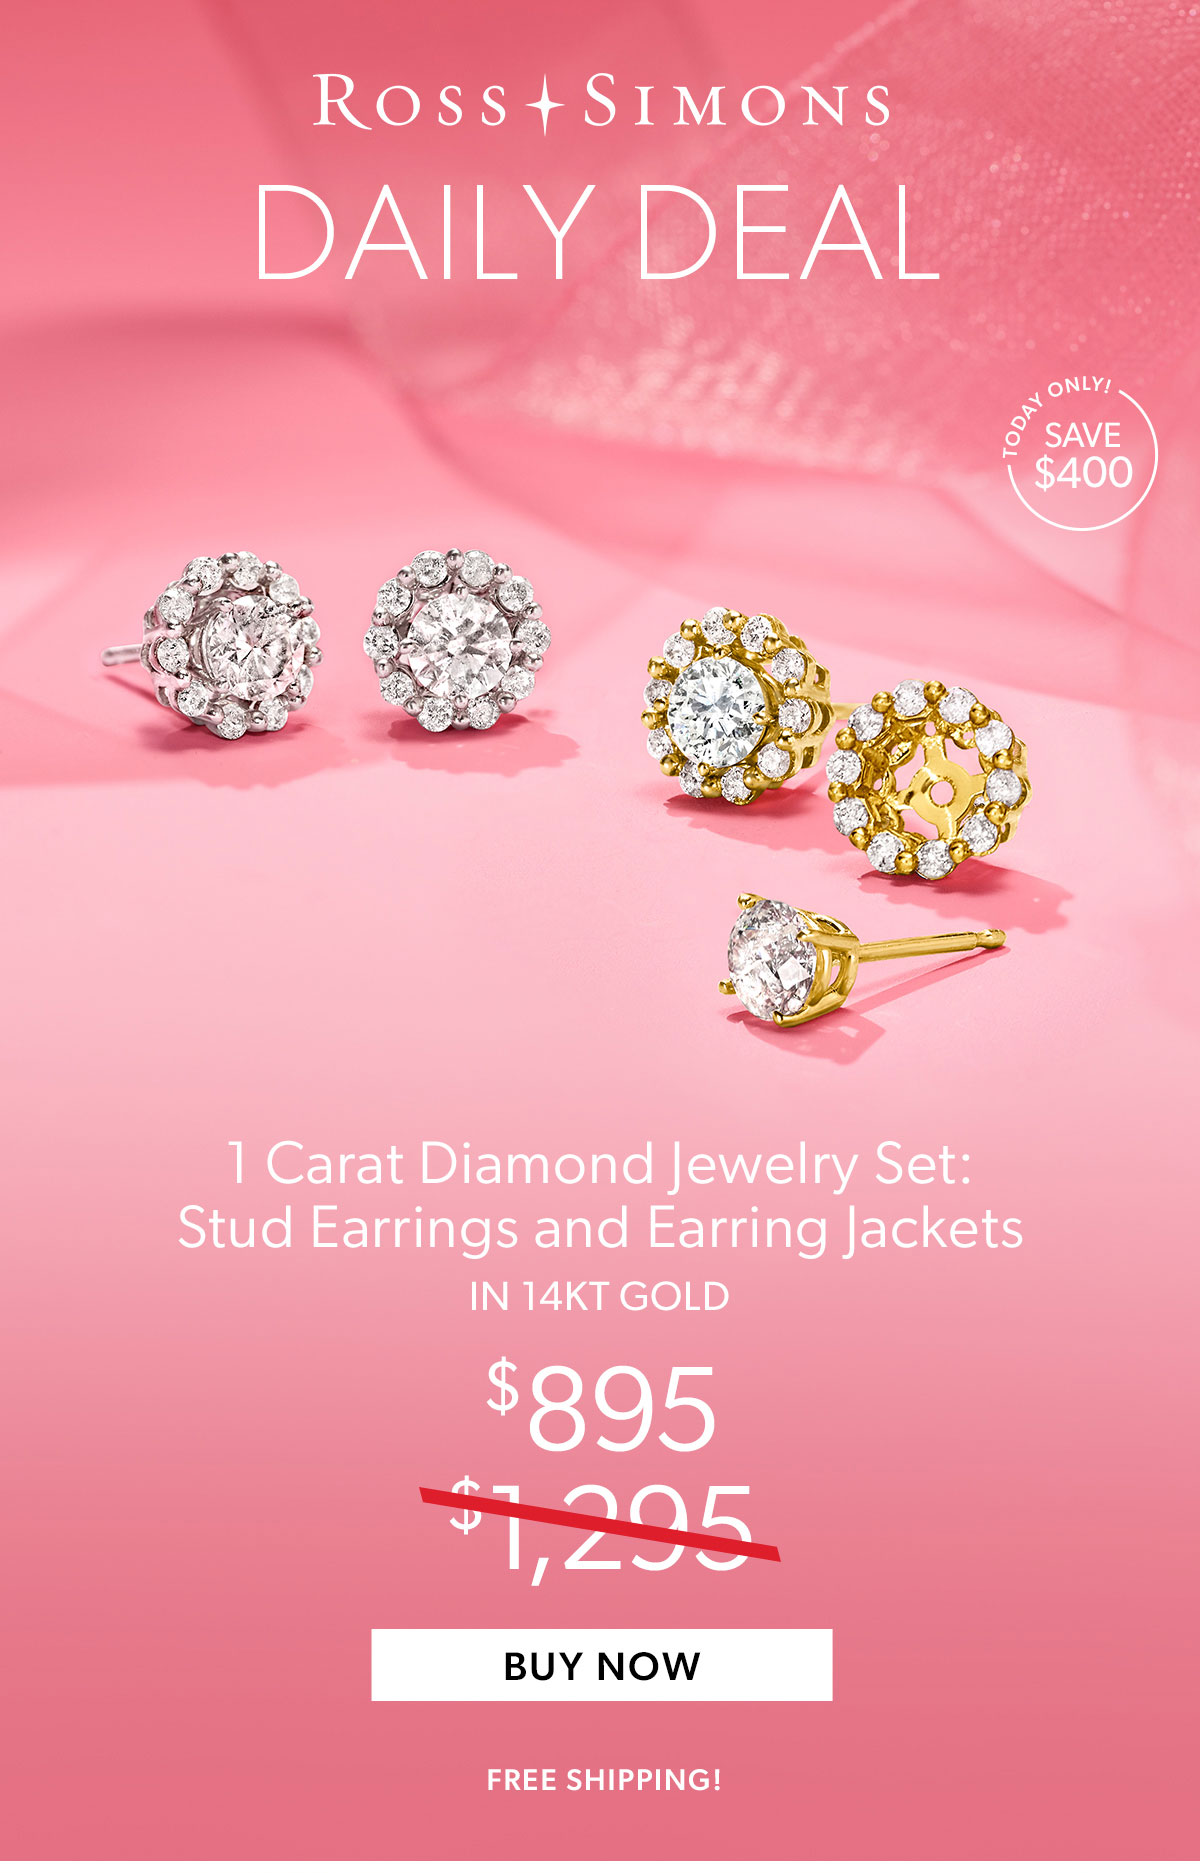 1 Carat Diamond Jewelry Set: Stud Earrings and Earring Jackets. Buy Now